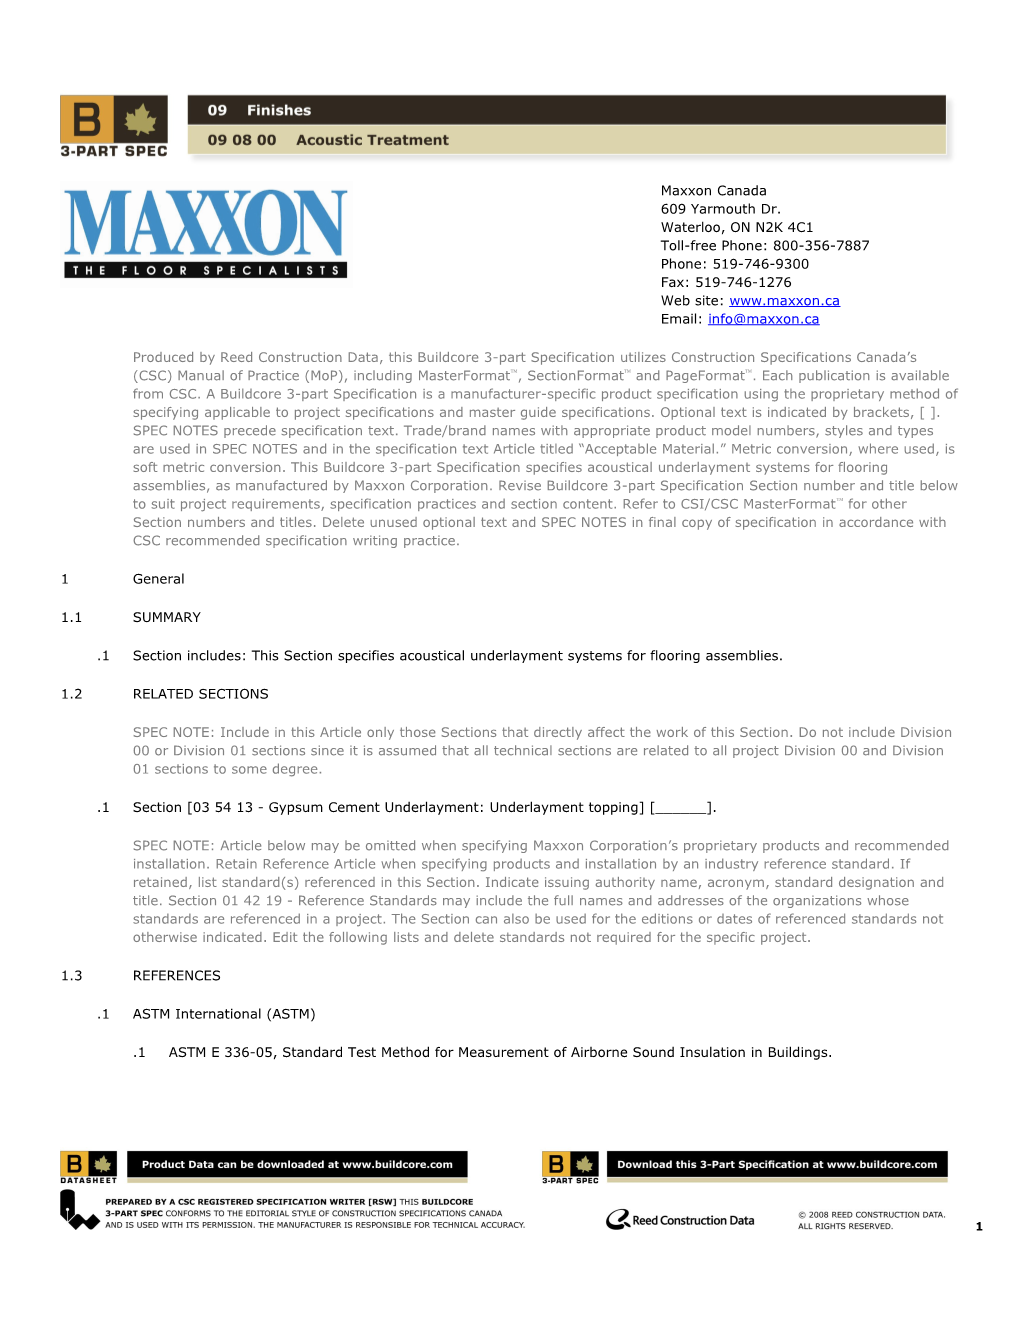 Maxxon Canada 09 80 00 Acoustic Treatment Specification